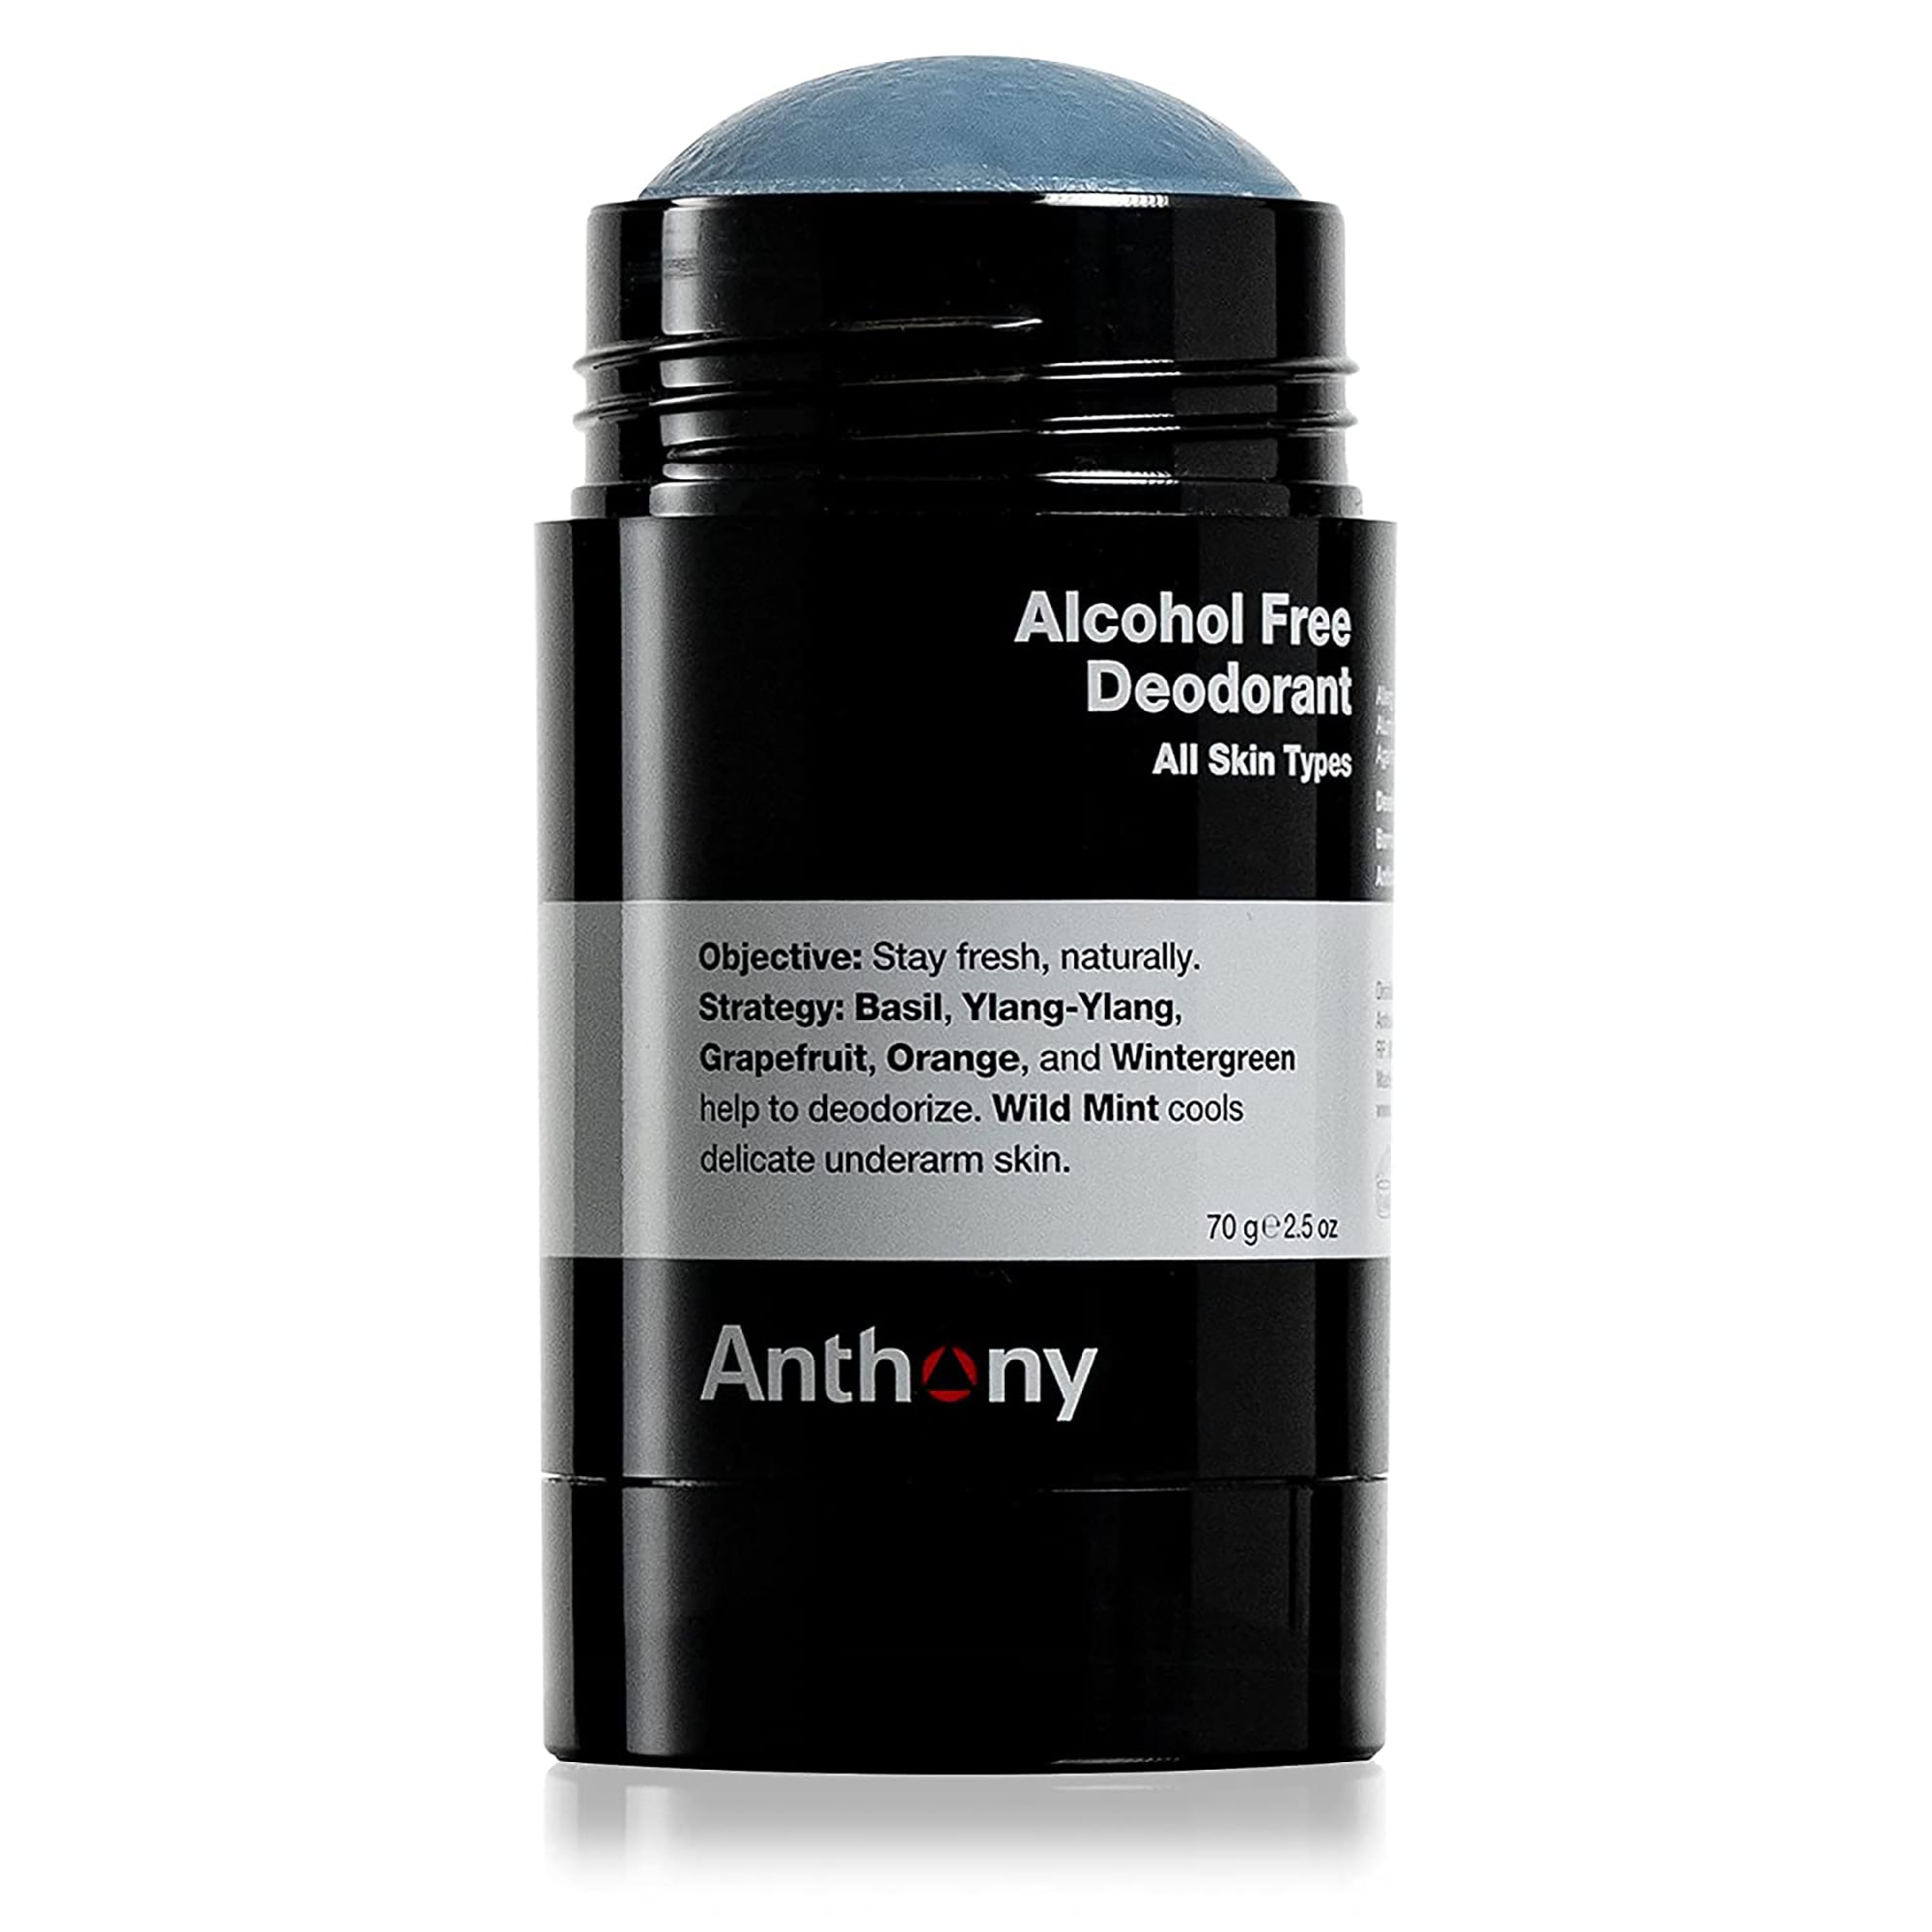 Anthony Alcohol Free Deodorant / 2.5